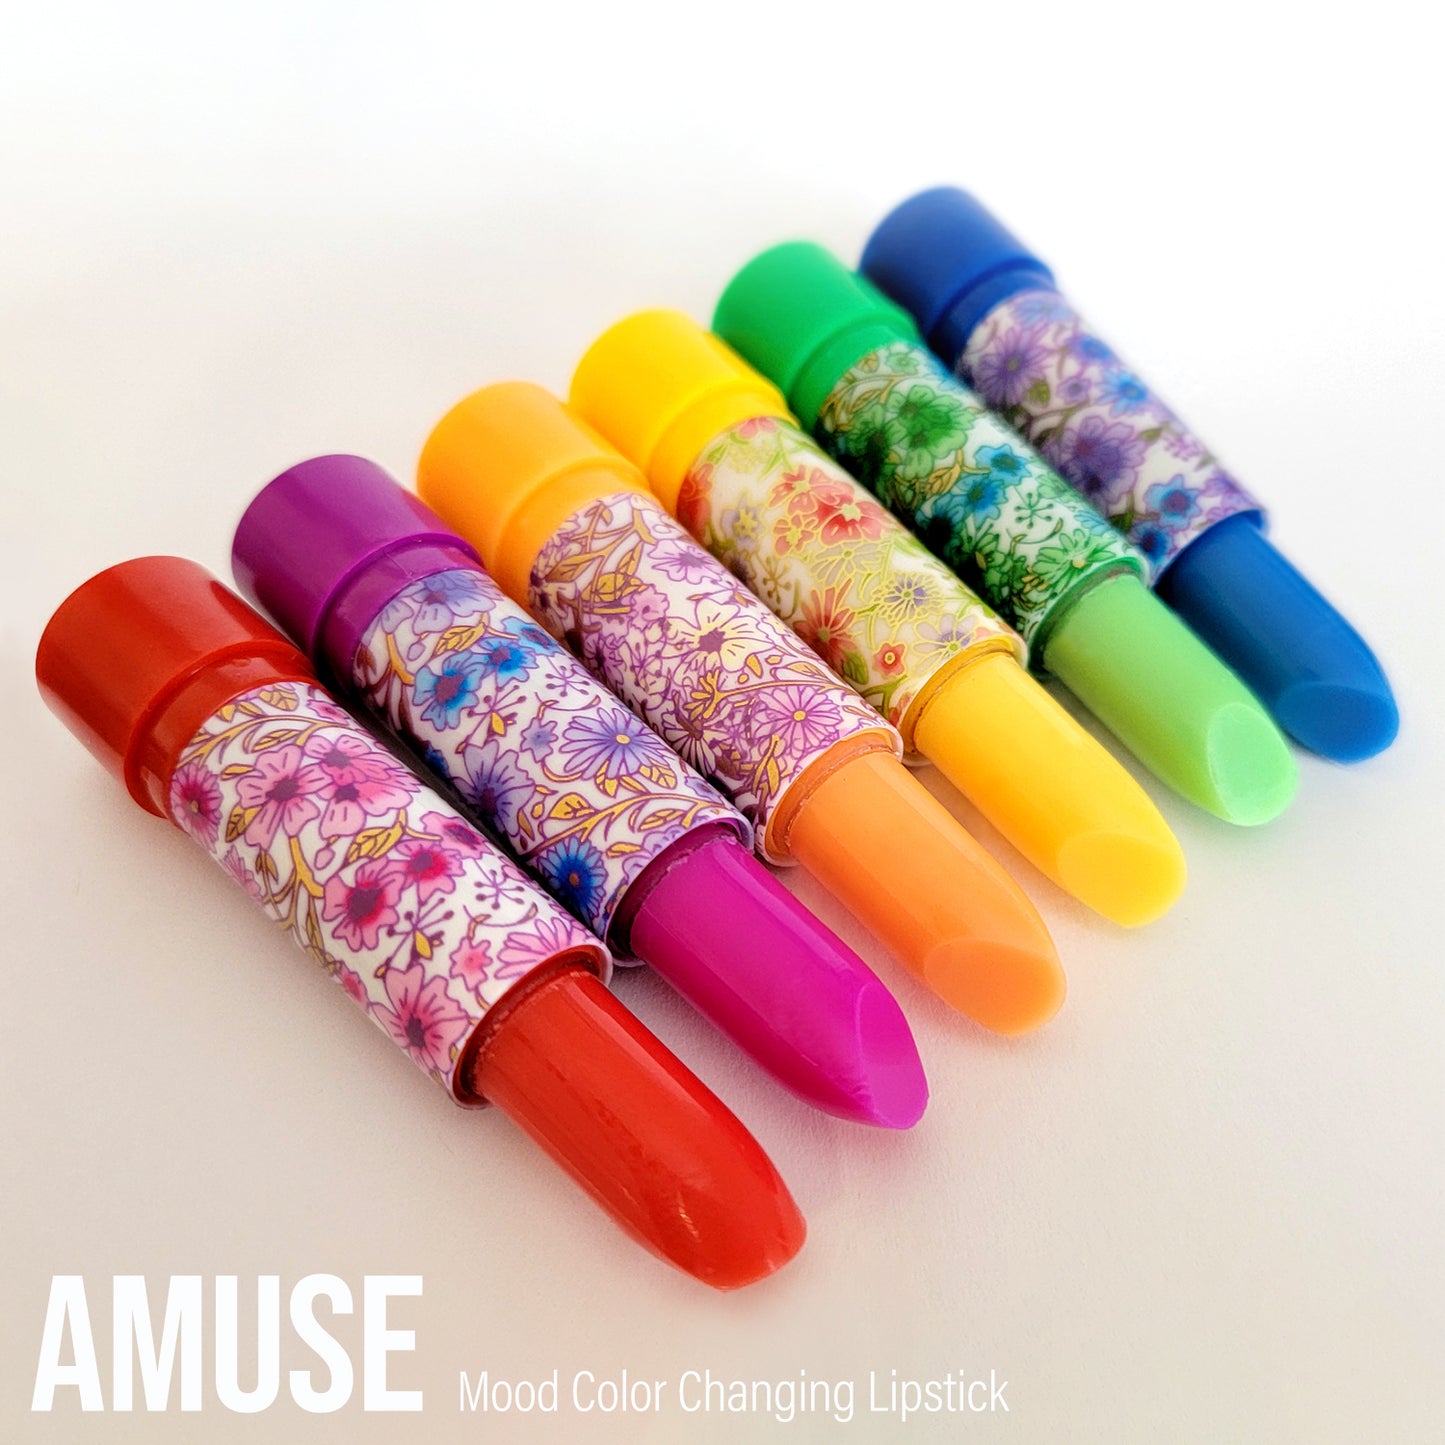 Amuse 12 Pcs Set Mood Color Changing Lipstick